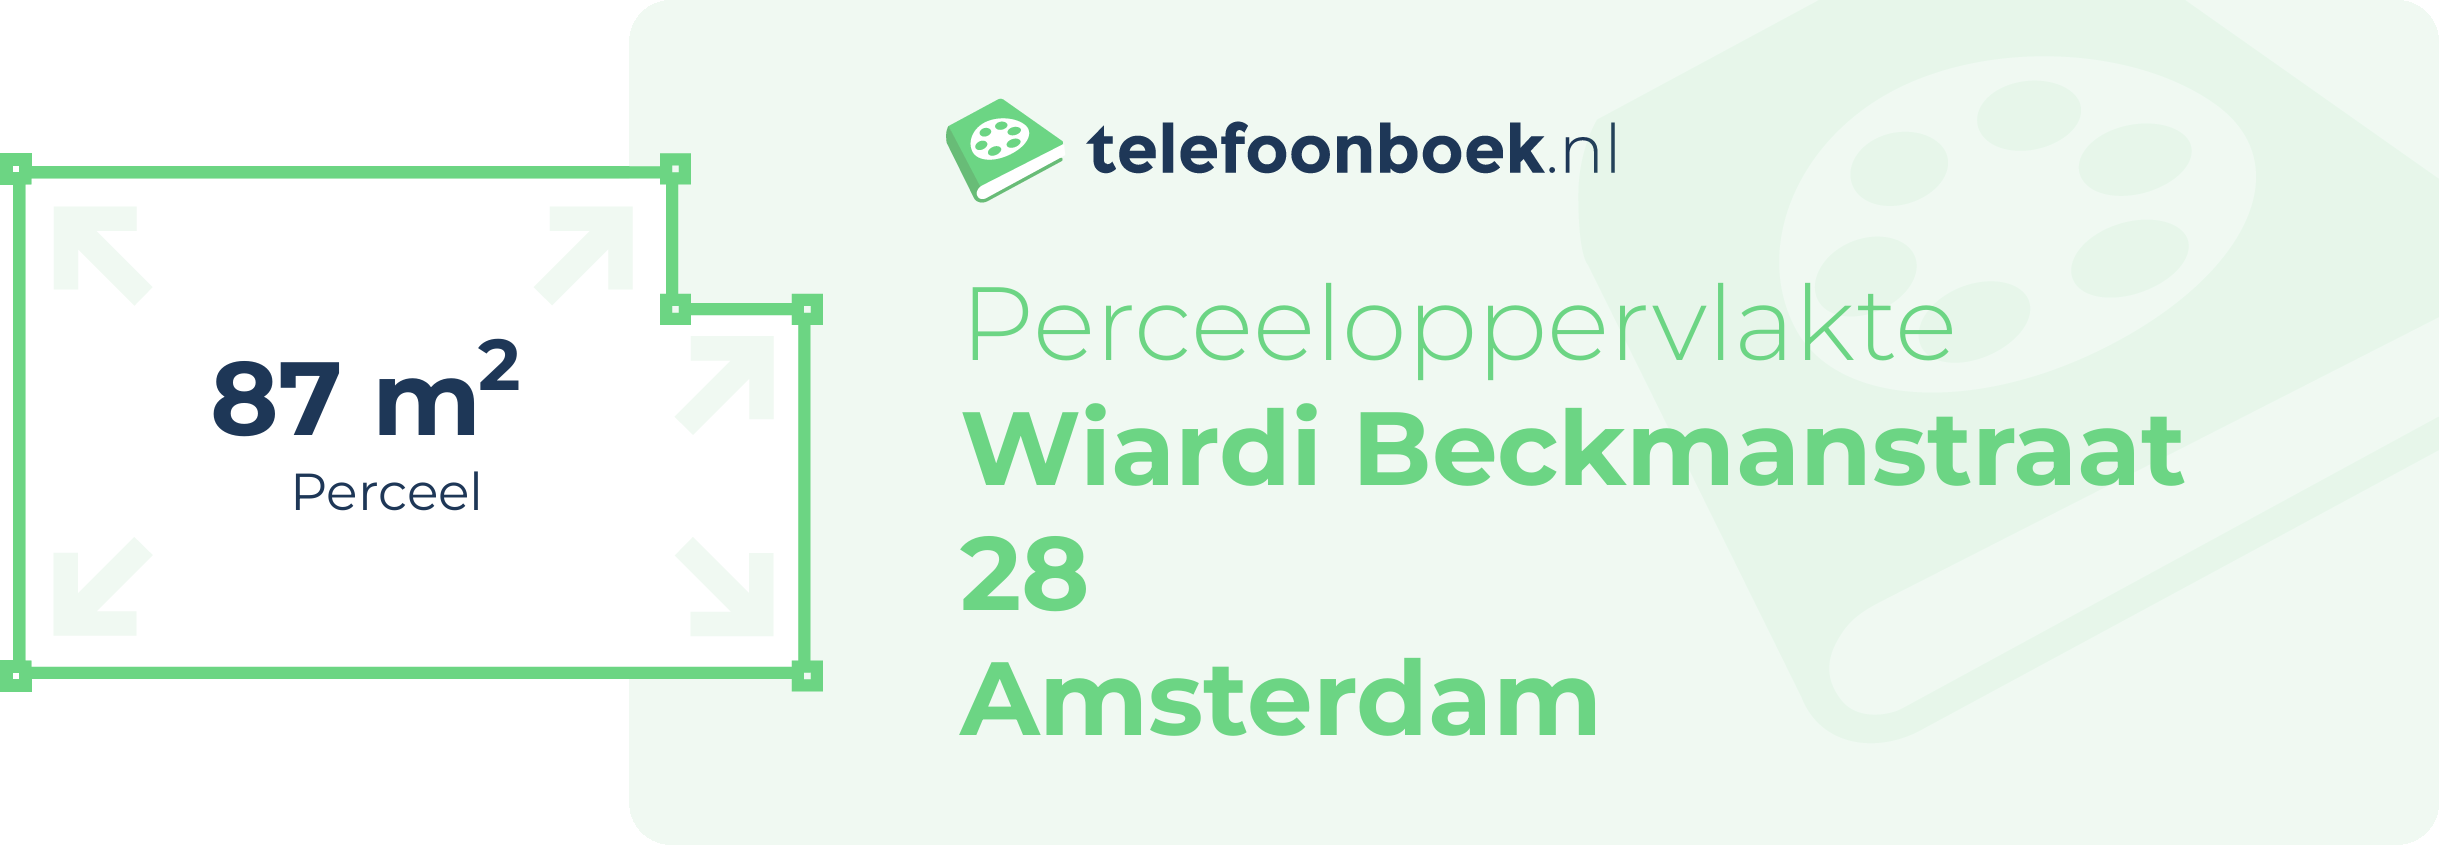 Perceeloppervlakte Wiardi Beckmanstraat 28 Amsterdam